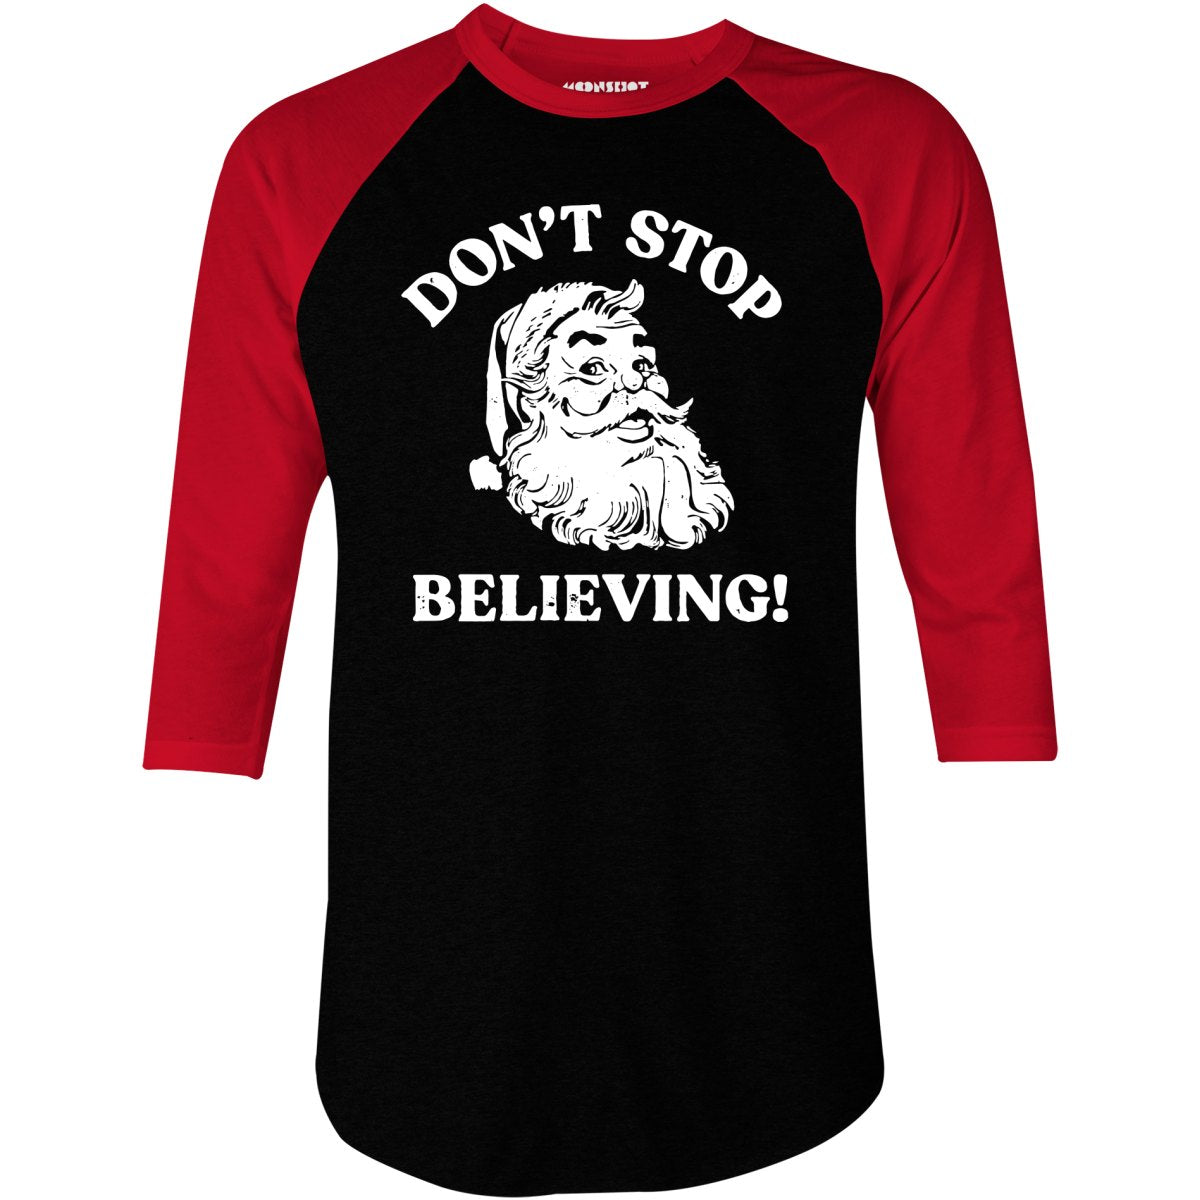 Don't Stop Believing - 3/4 Sleeve Raglan T-Shirt